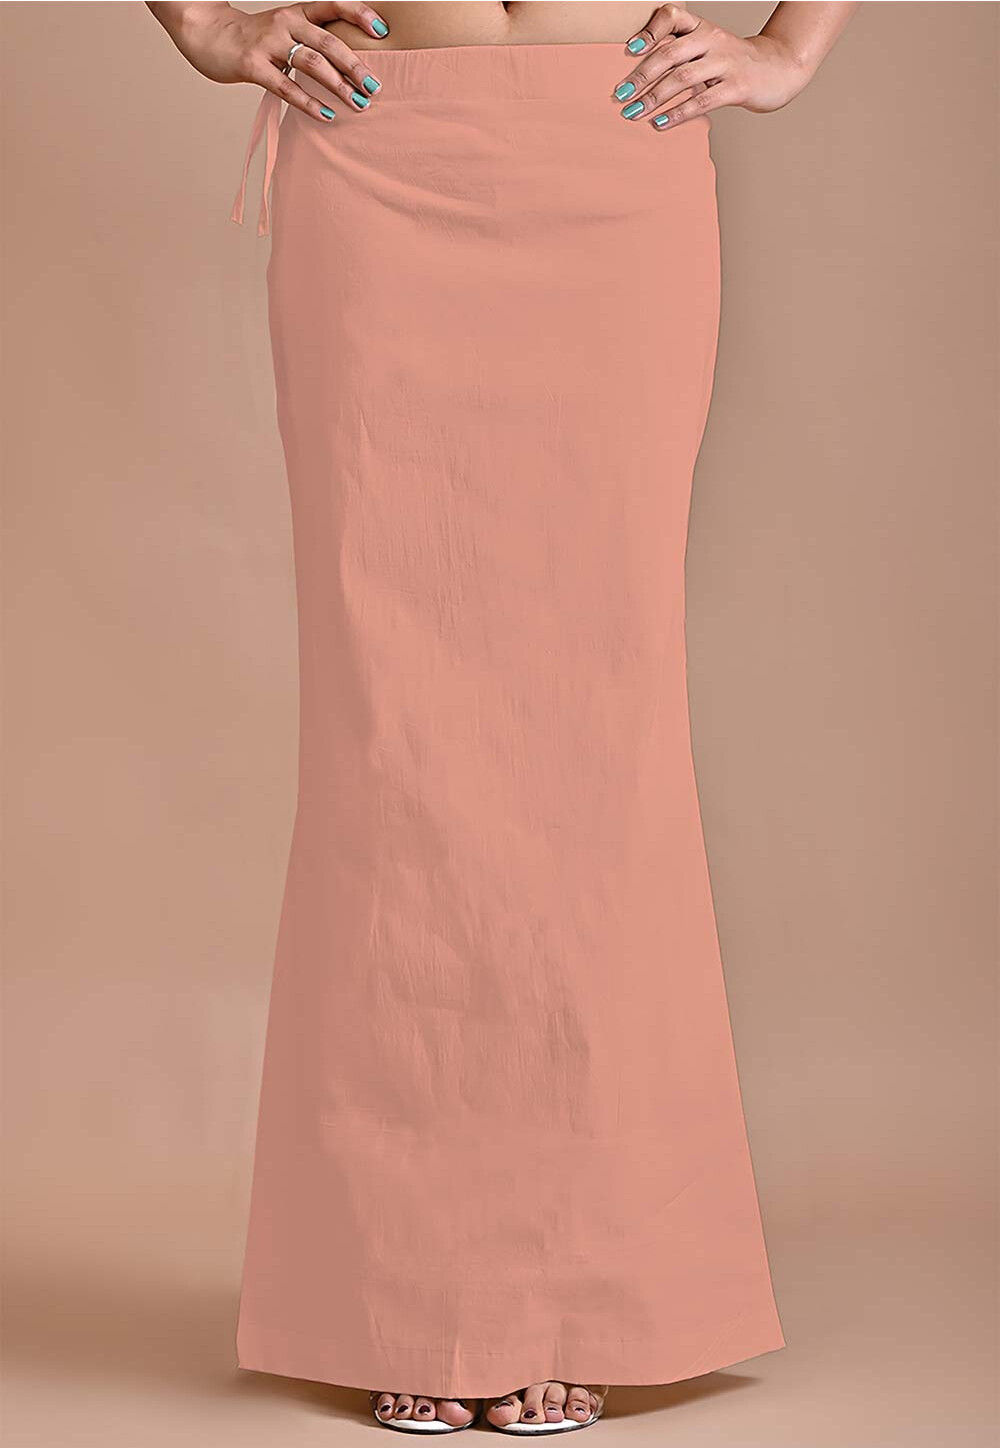 Solid Color Lycra Cotton Shapewear Petticoat in Peach : UUB1098